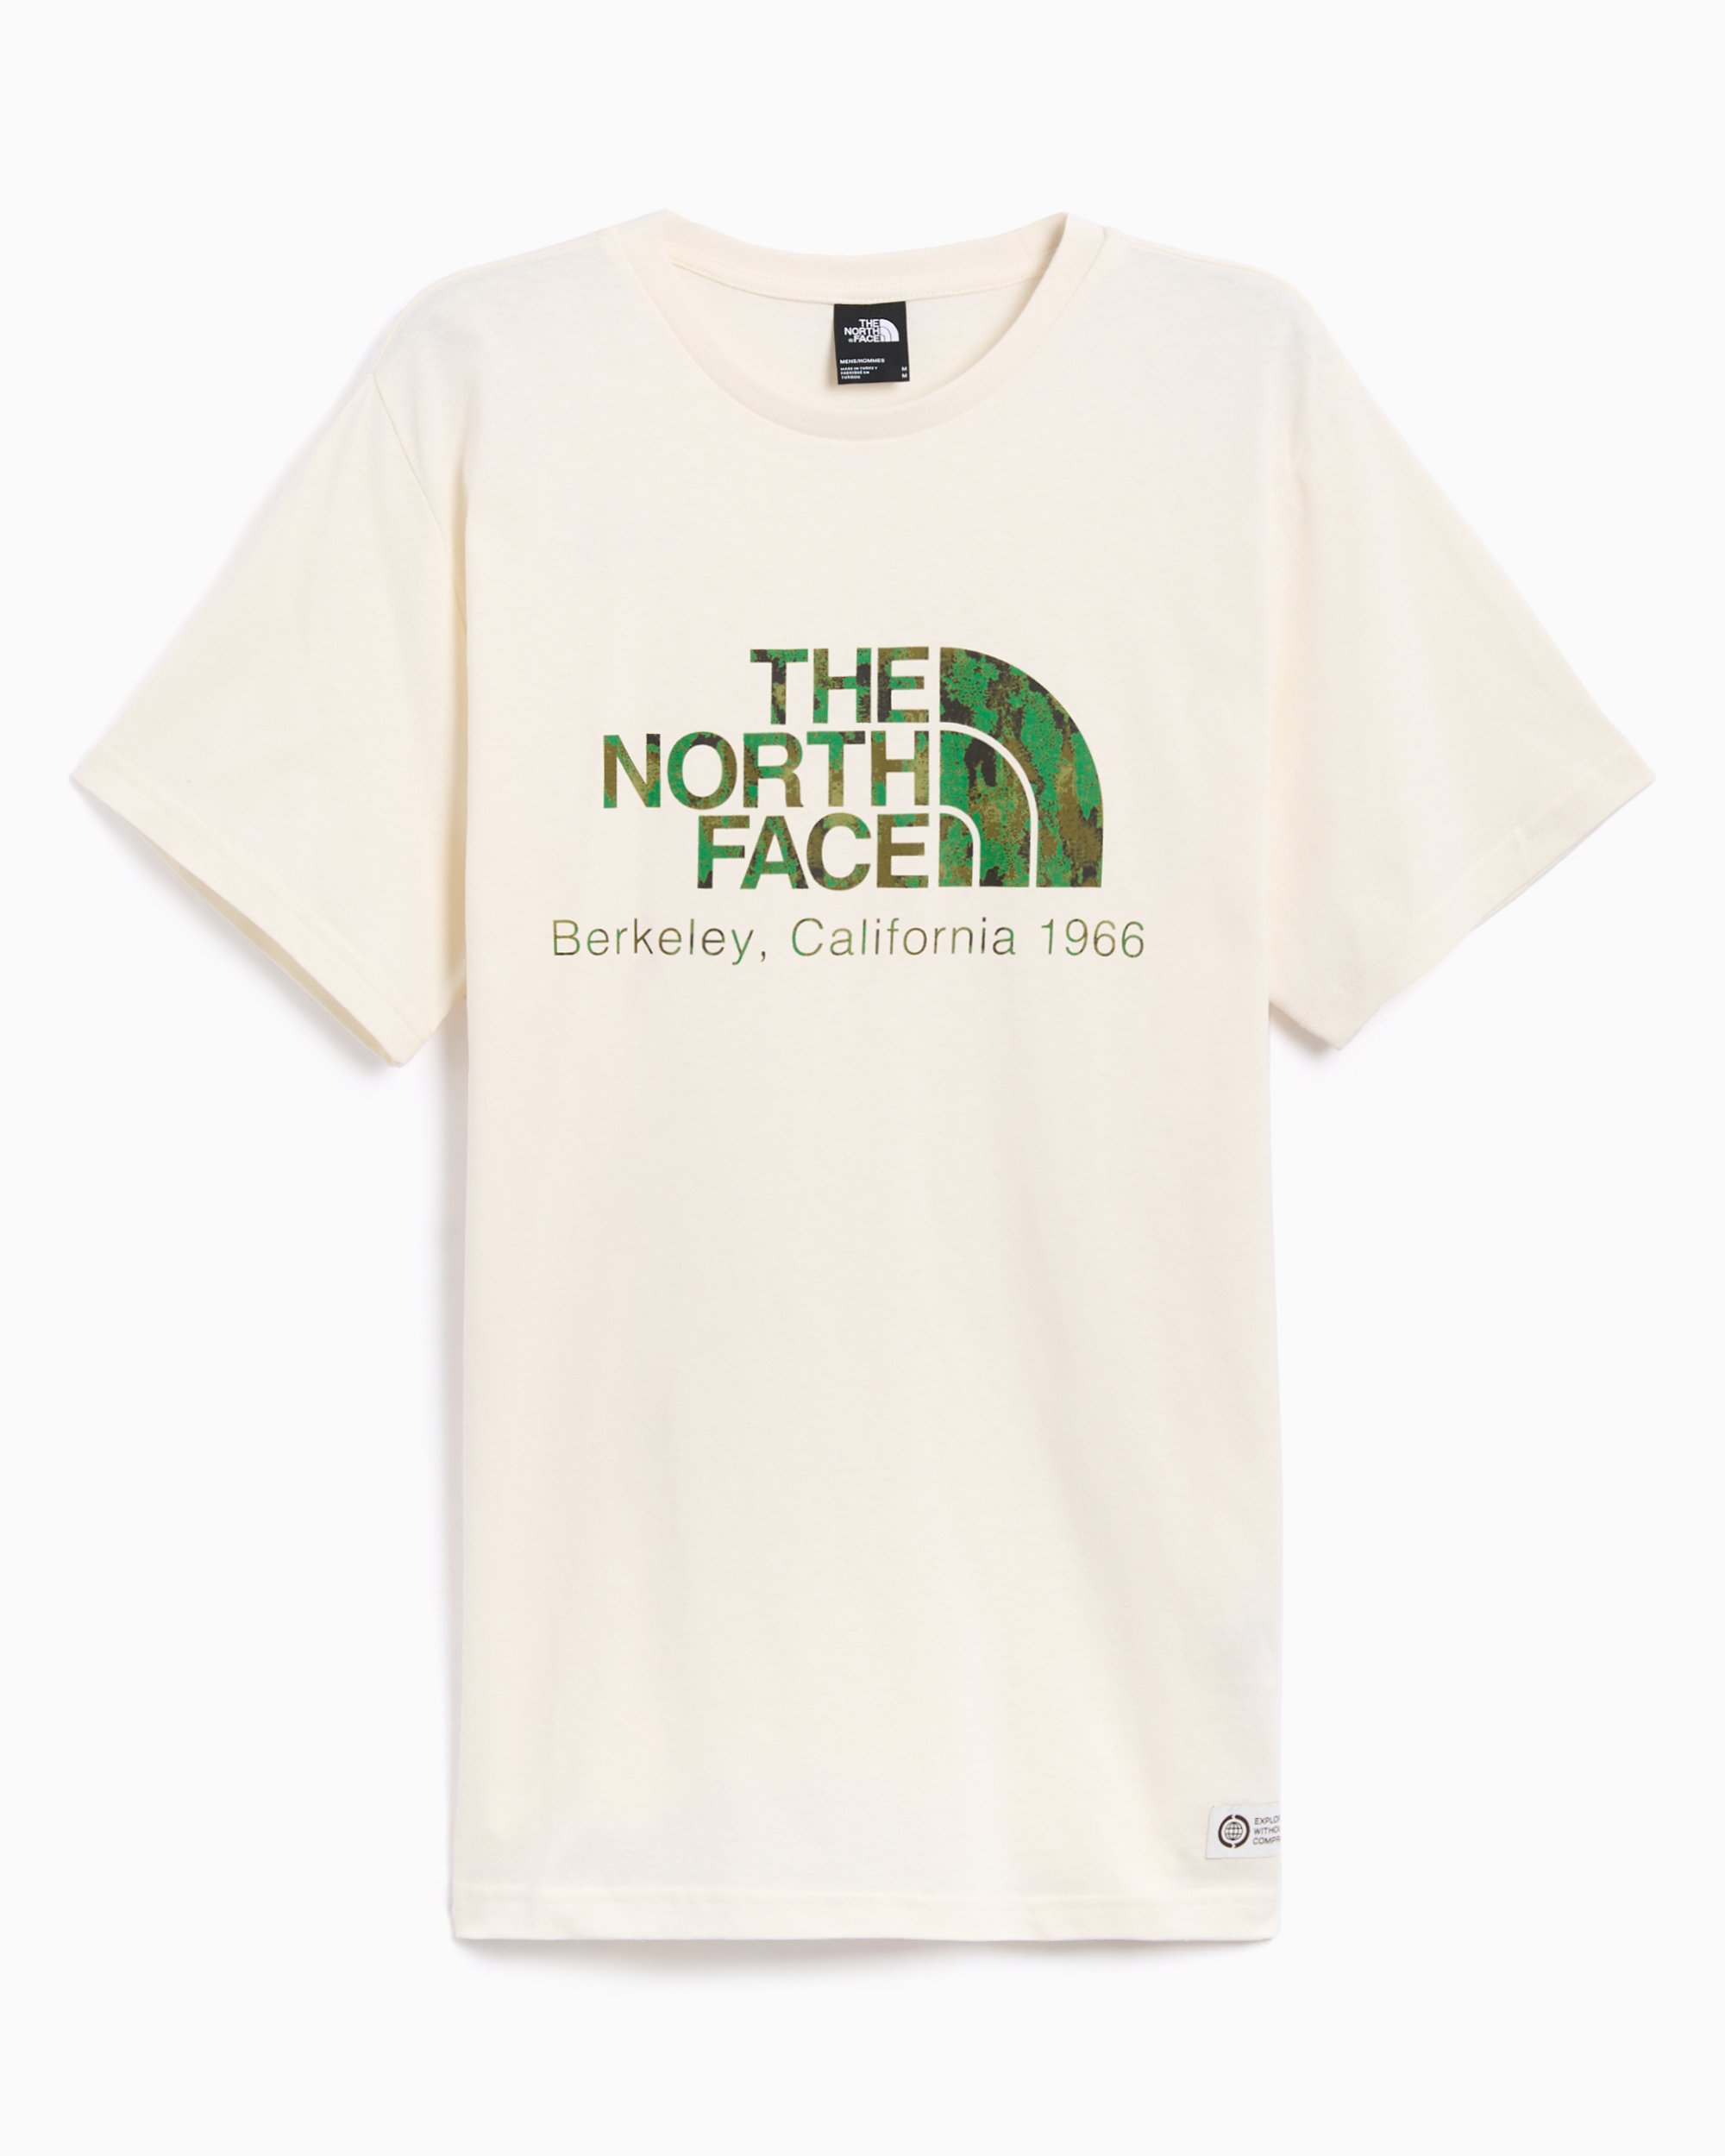 The North Face Berkeley California Men's T-Shirt Green, White NF0A87U5Y1O1